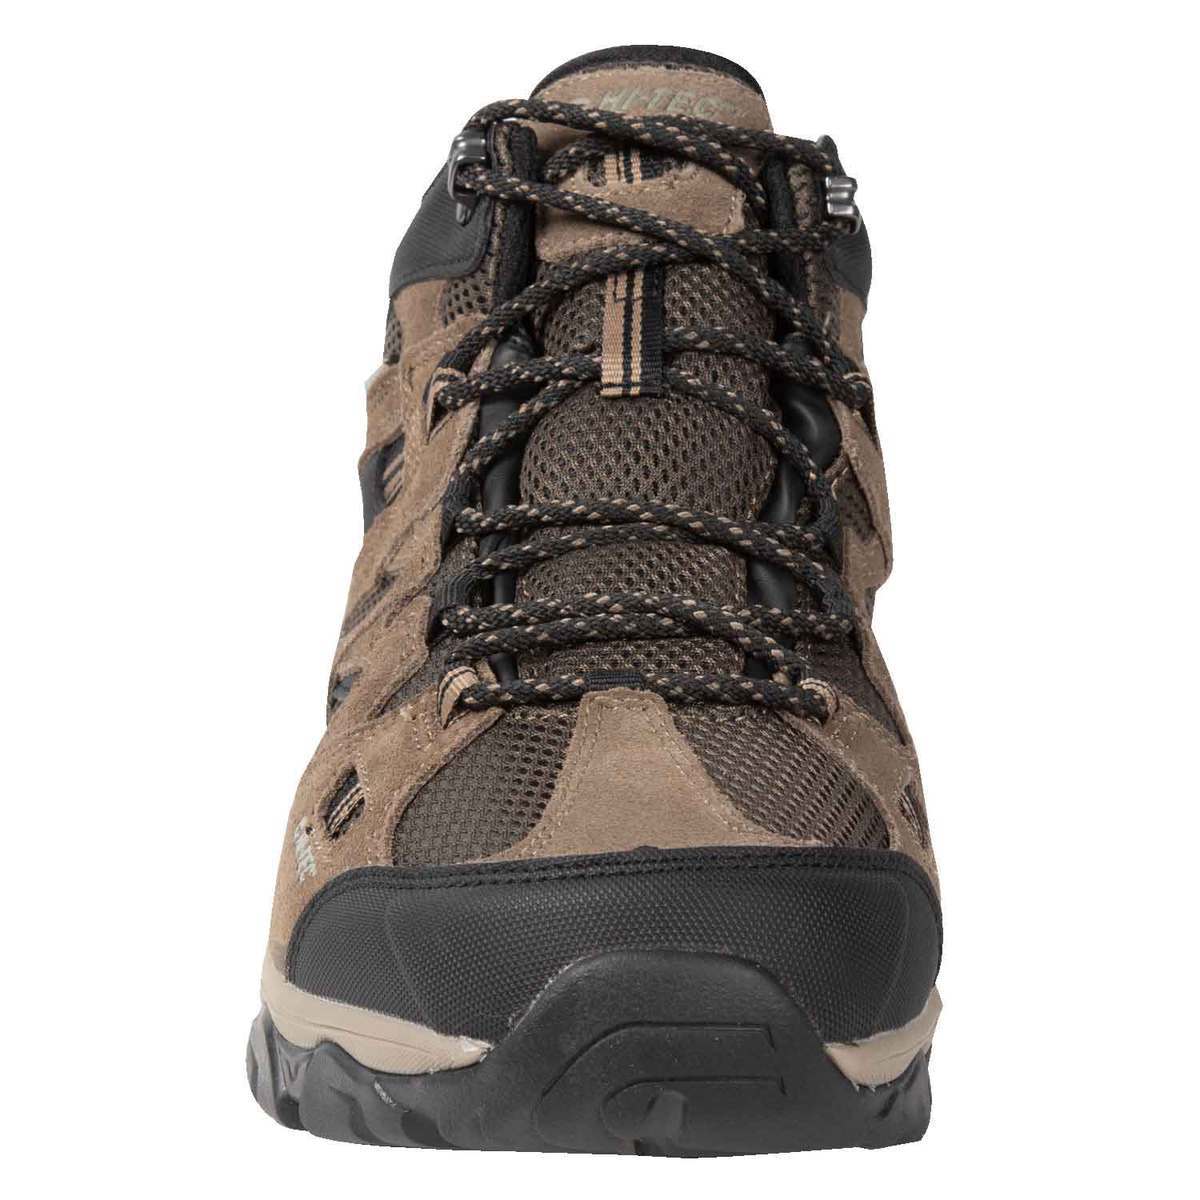 Hi-Tec Men's Ravus Vent Waterproof Mid Hiking Boots - Dark Taupe - Size ...